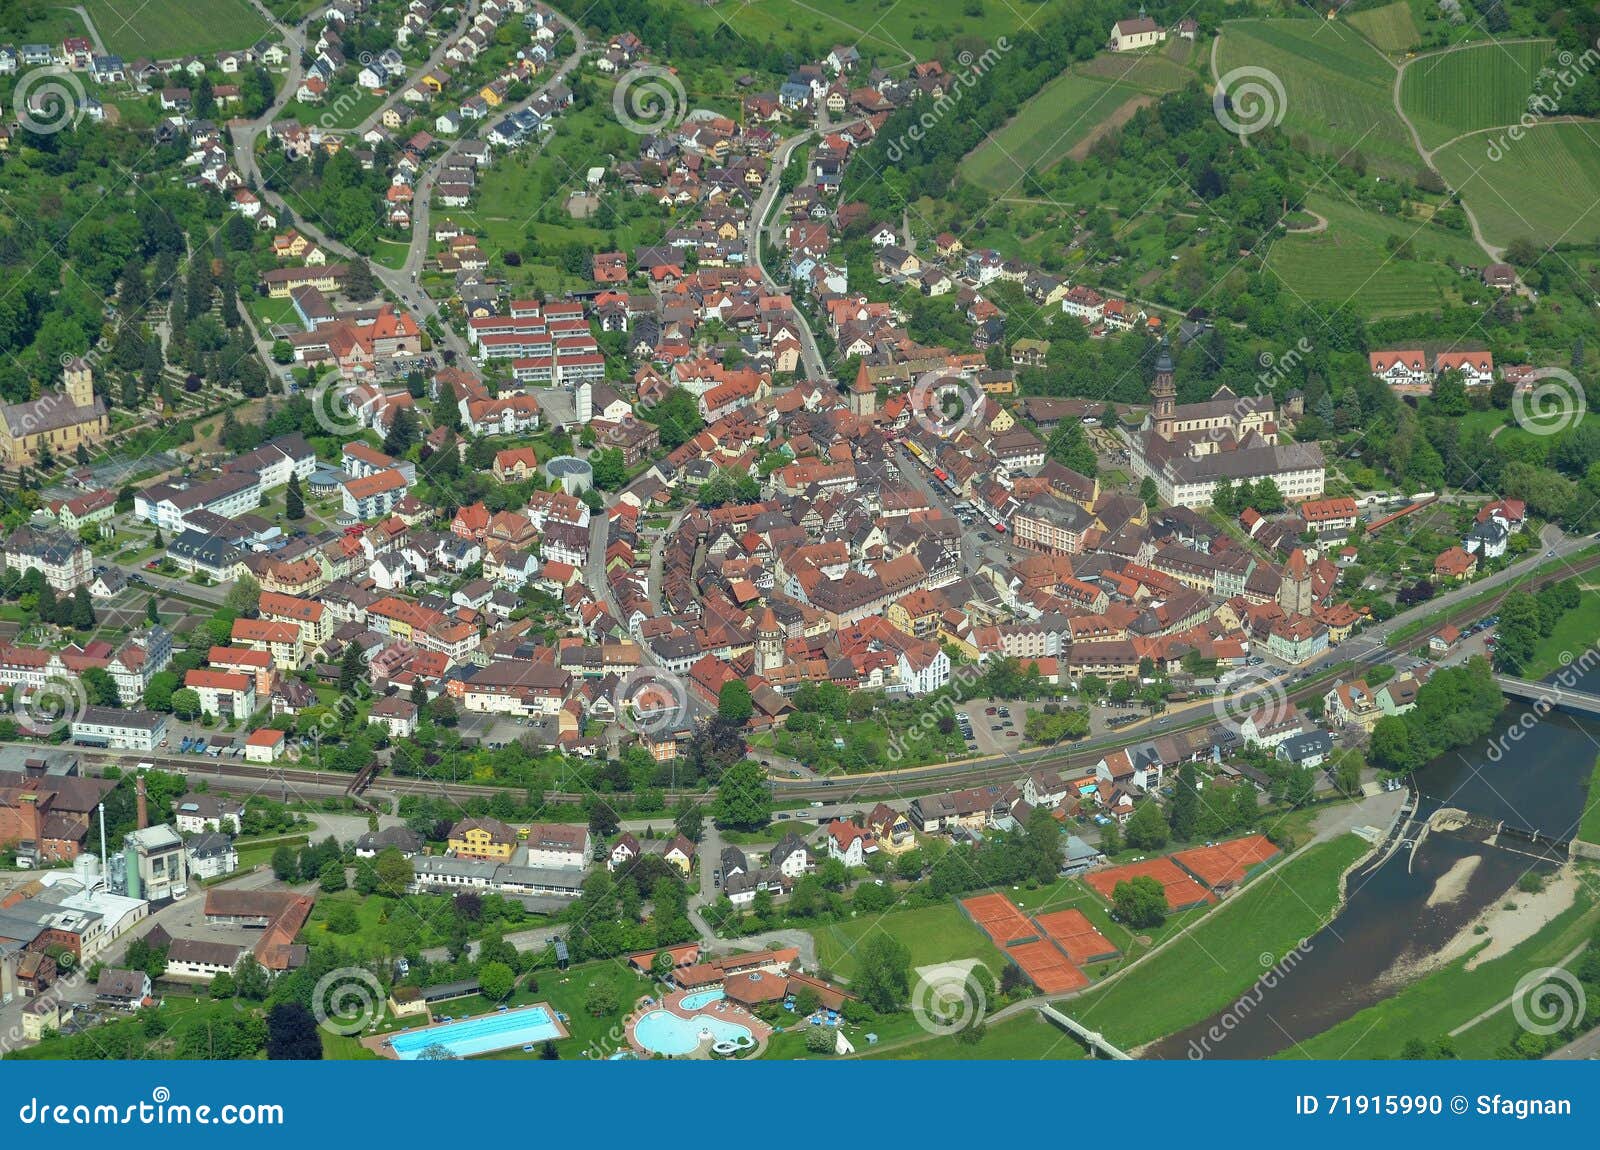 gengenbach aerial